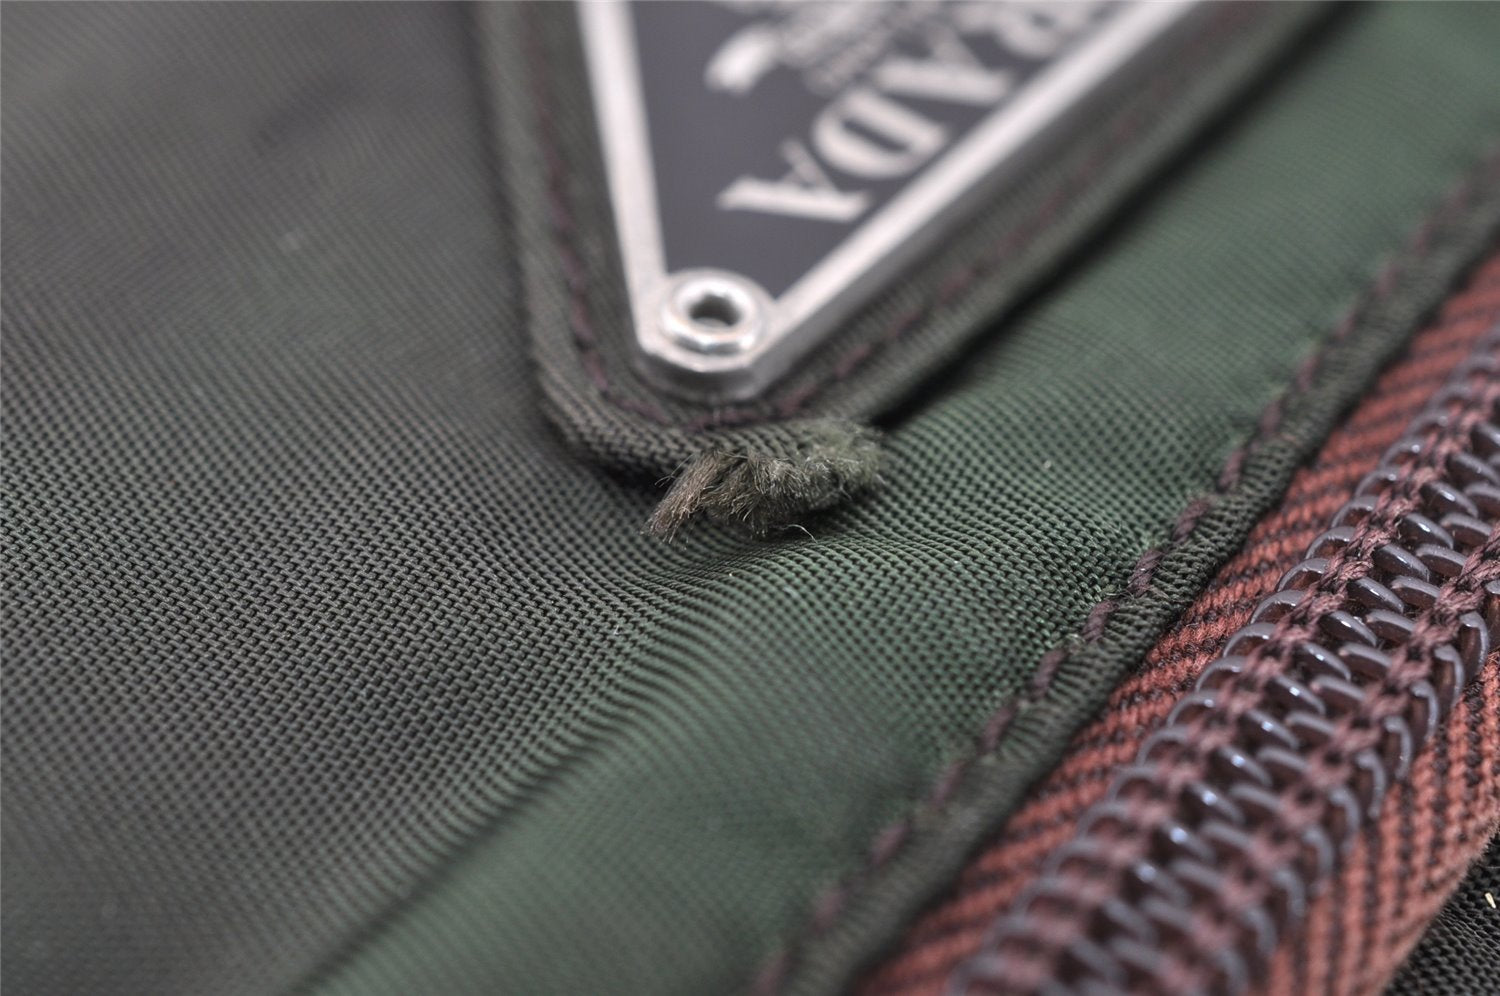 Authentic PRADA Vintage Nylon Tessuto Shoulder Tote Bag Green 9251I